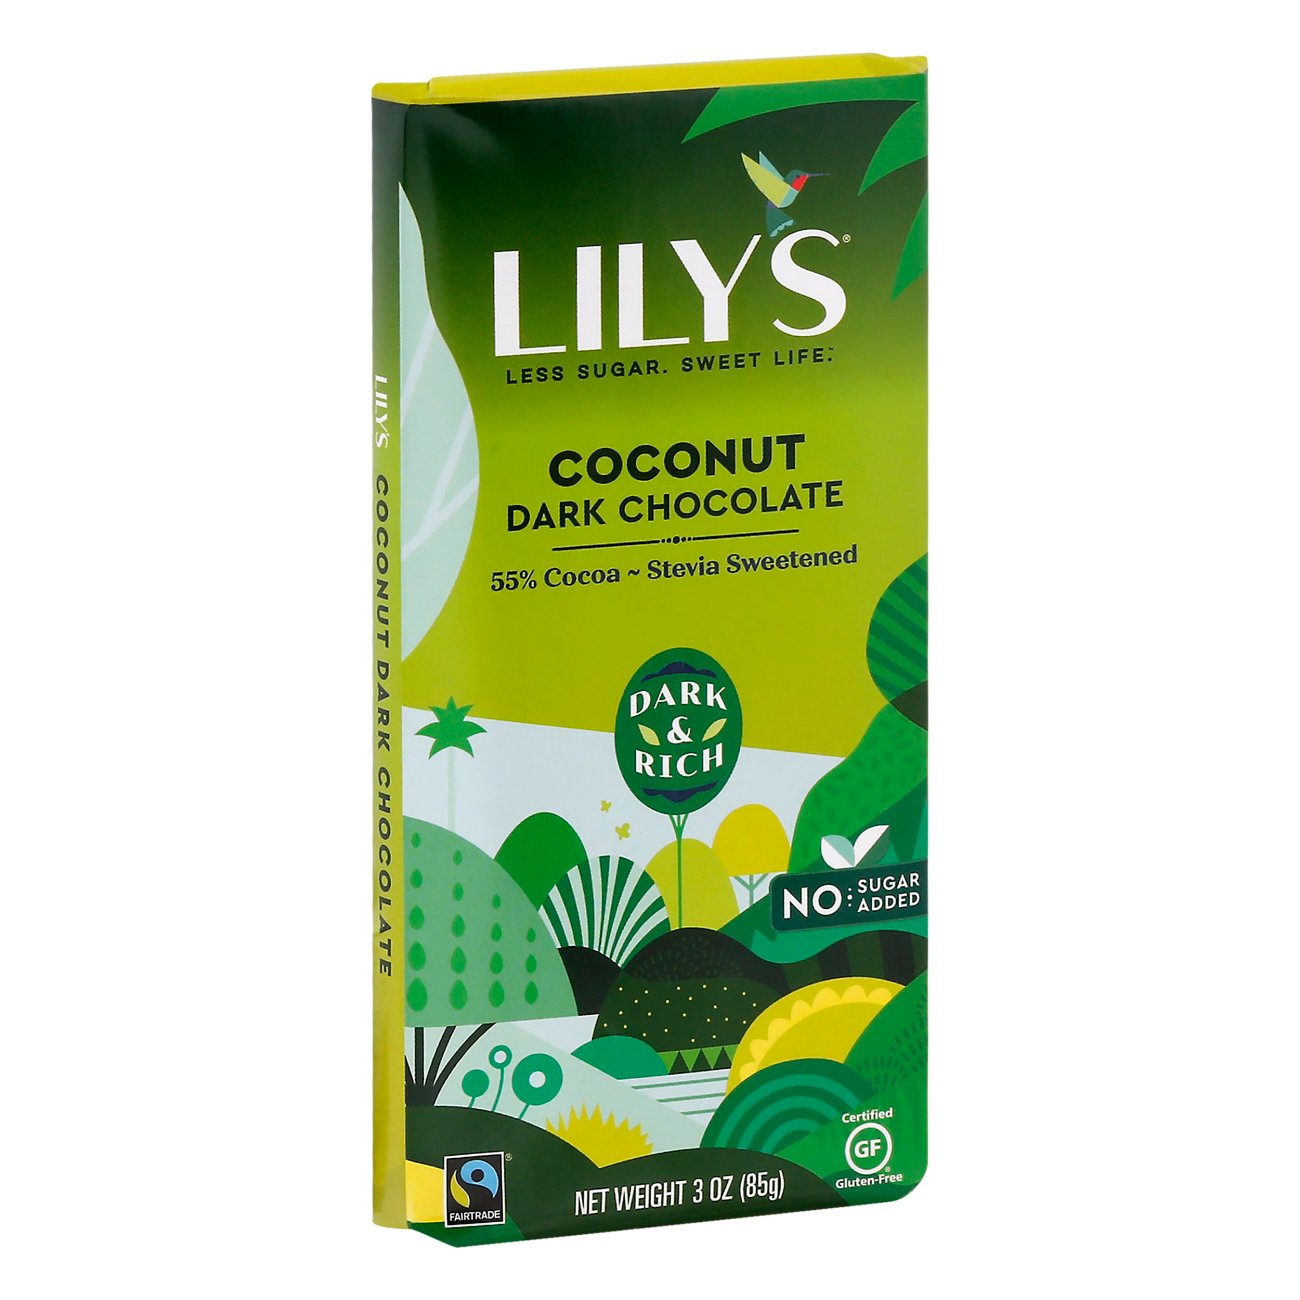 Lilys Dark Chocolate Coconut Bar Shop Candy At H E B 9320